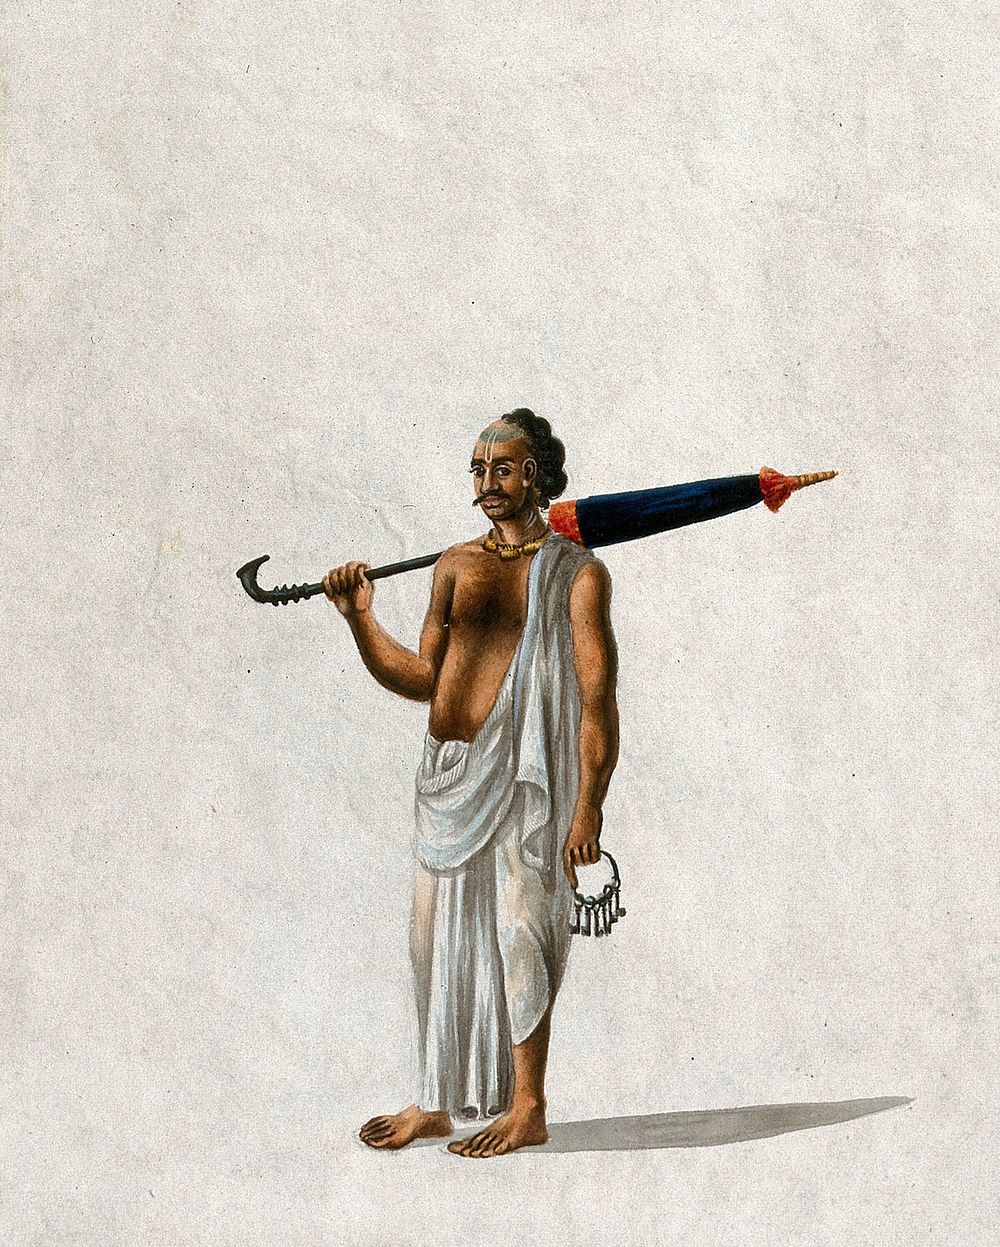 A head bearer, holding an umbrella and a bunch of keys. Gouache painting by an Indian artist.